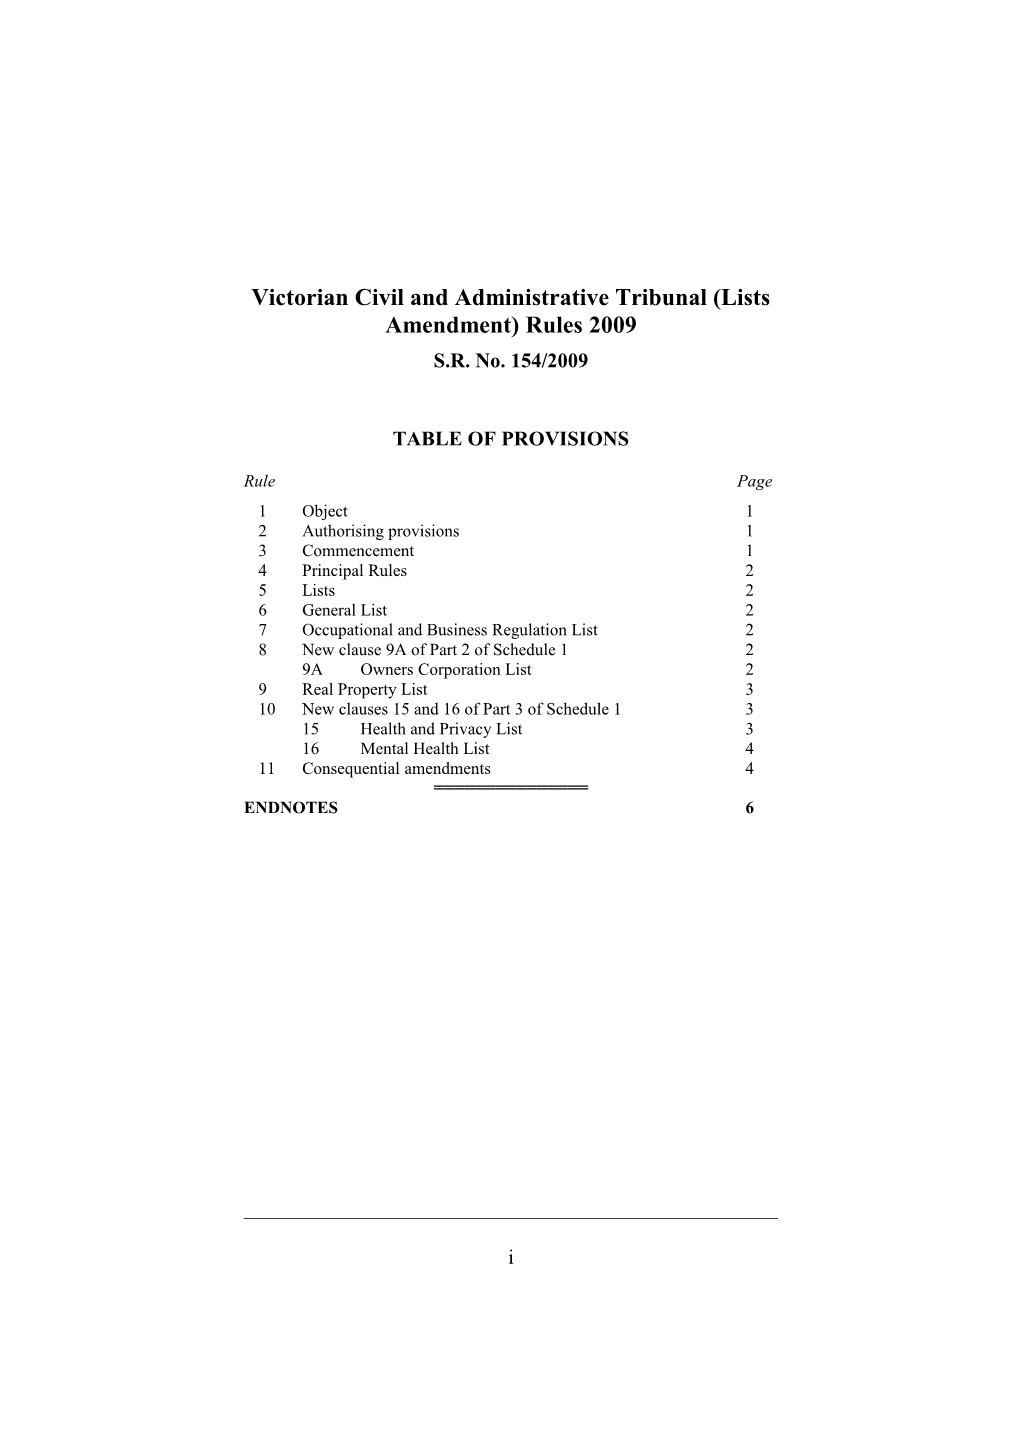 Victorian Civil and Administrative Tribunal (Lists Amendment) Rules 2009